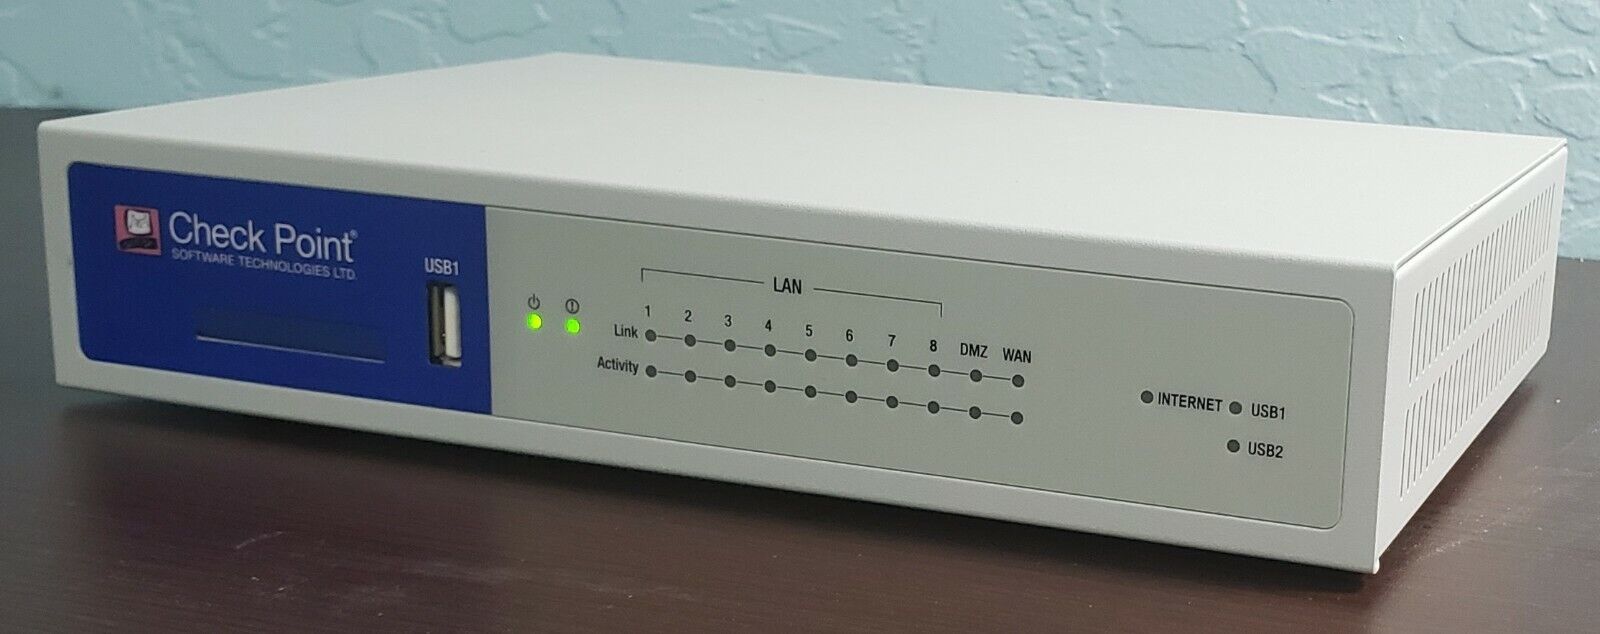 Check Point L-50 Security Gateway SG-80A Firewall - W/Power Supply